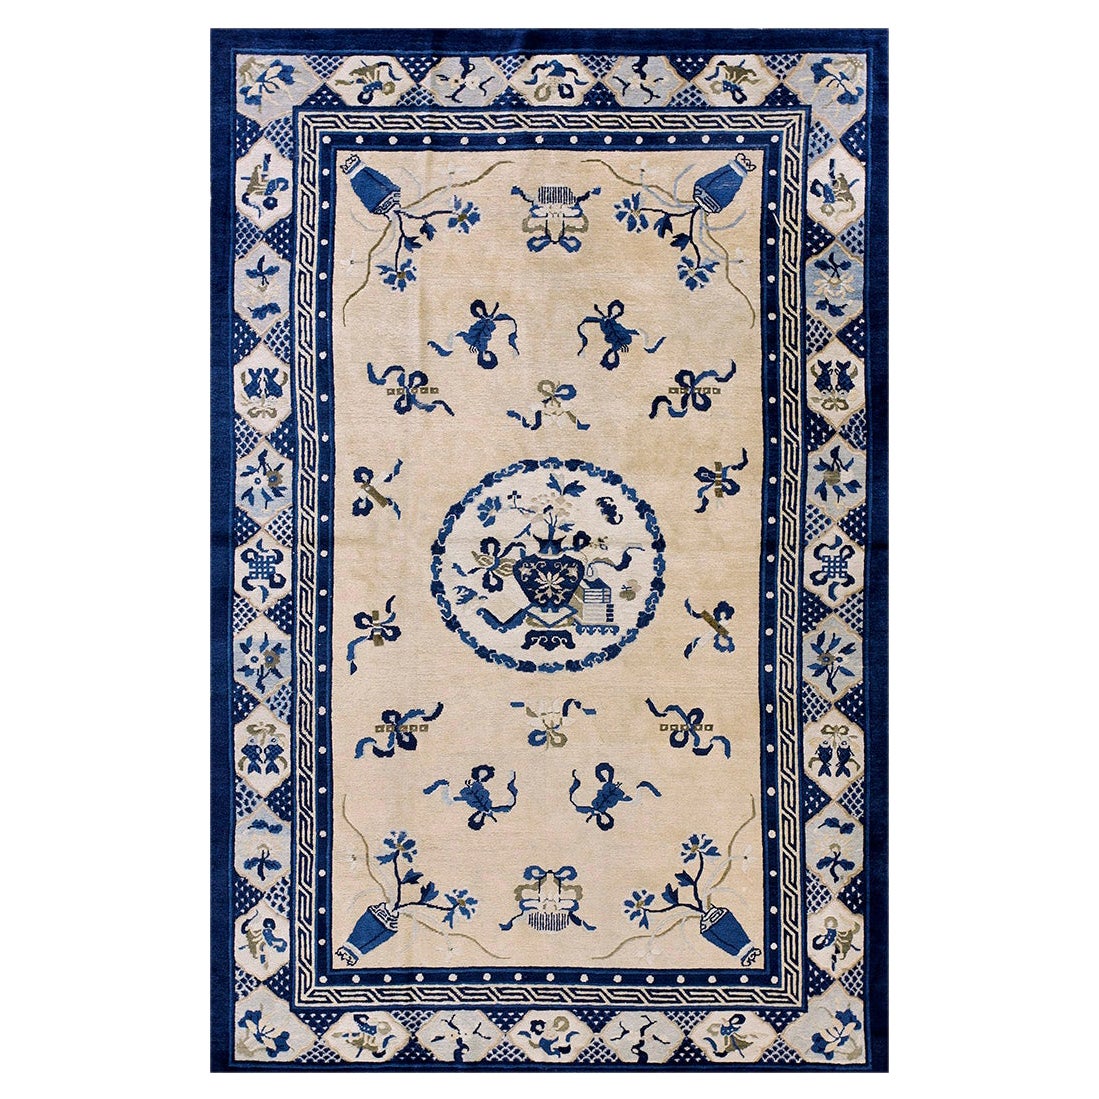 Late 19th Century Chinese Peking Carpet ( 5' x 7'10" - 152 x 240 )